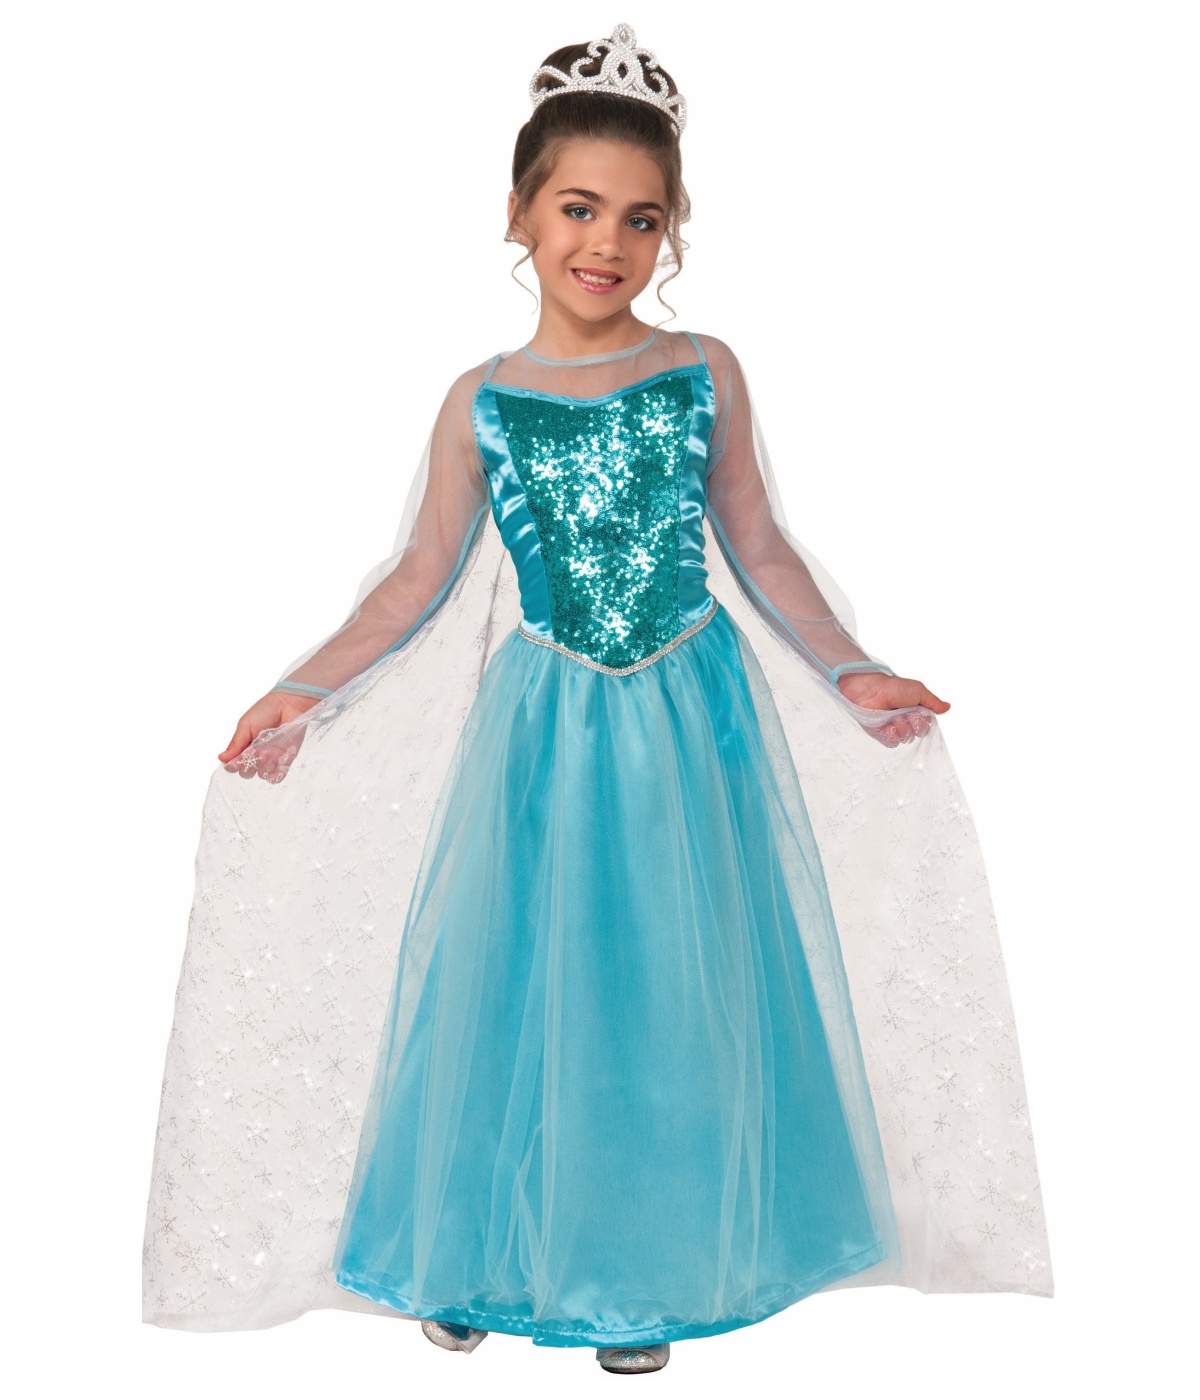  Girls Ice Crystal Princess Costume